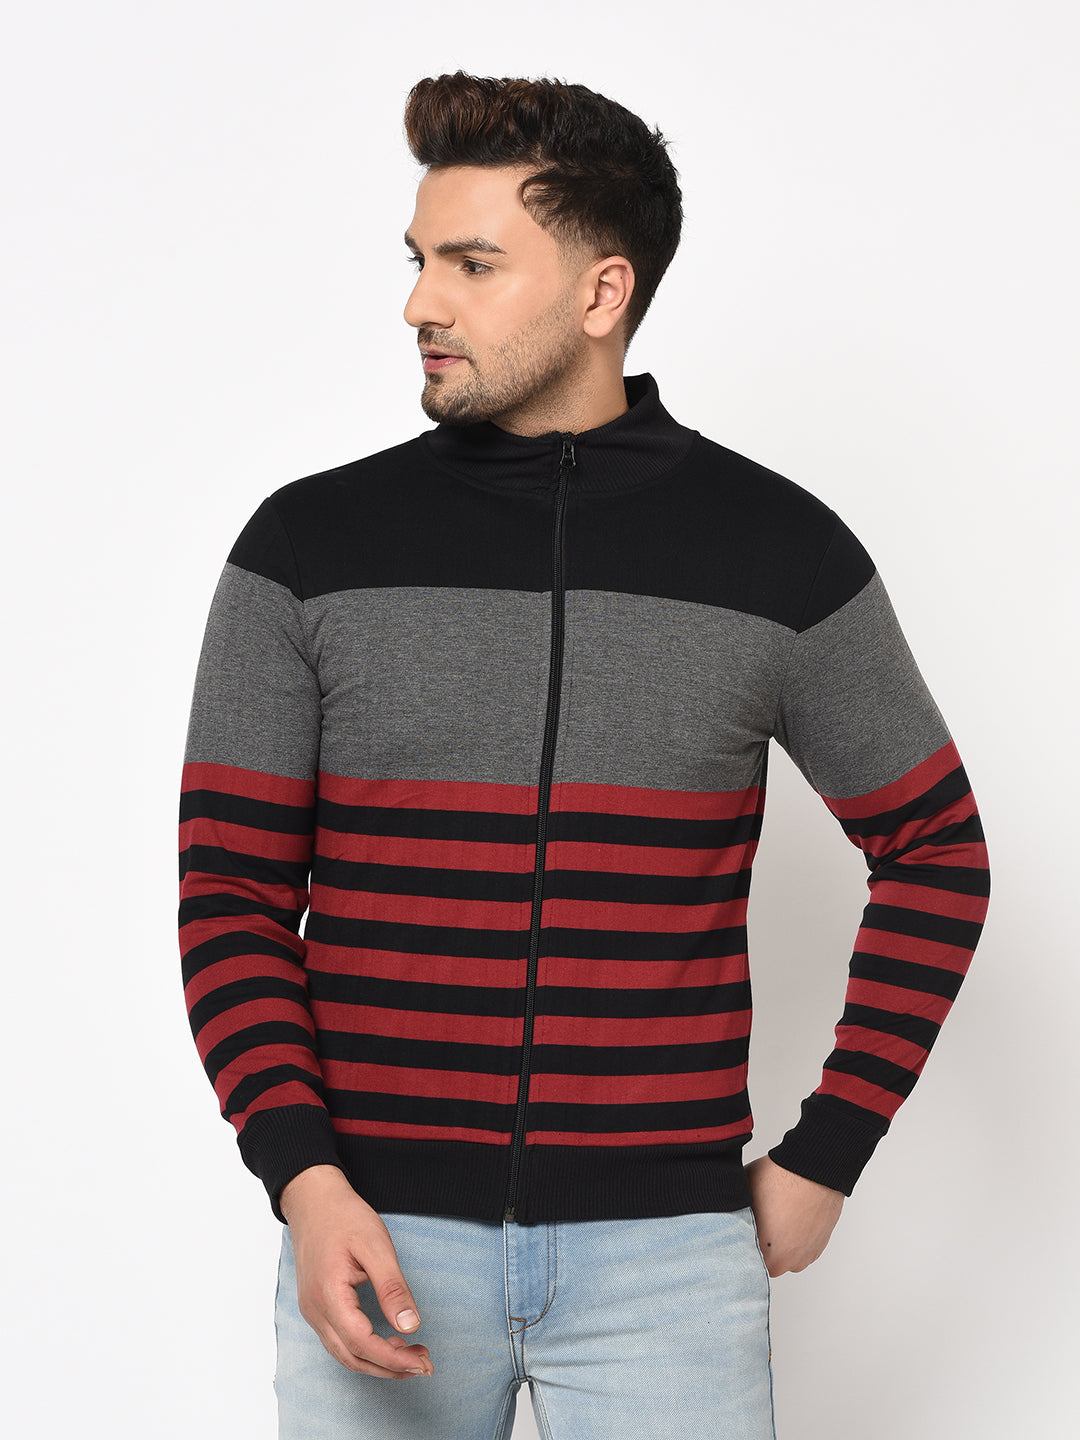 Austin wood Mens Multi Long Sleeves High Neck Striped Sweatshirt